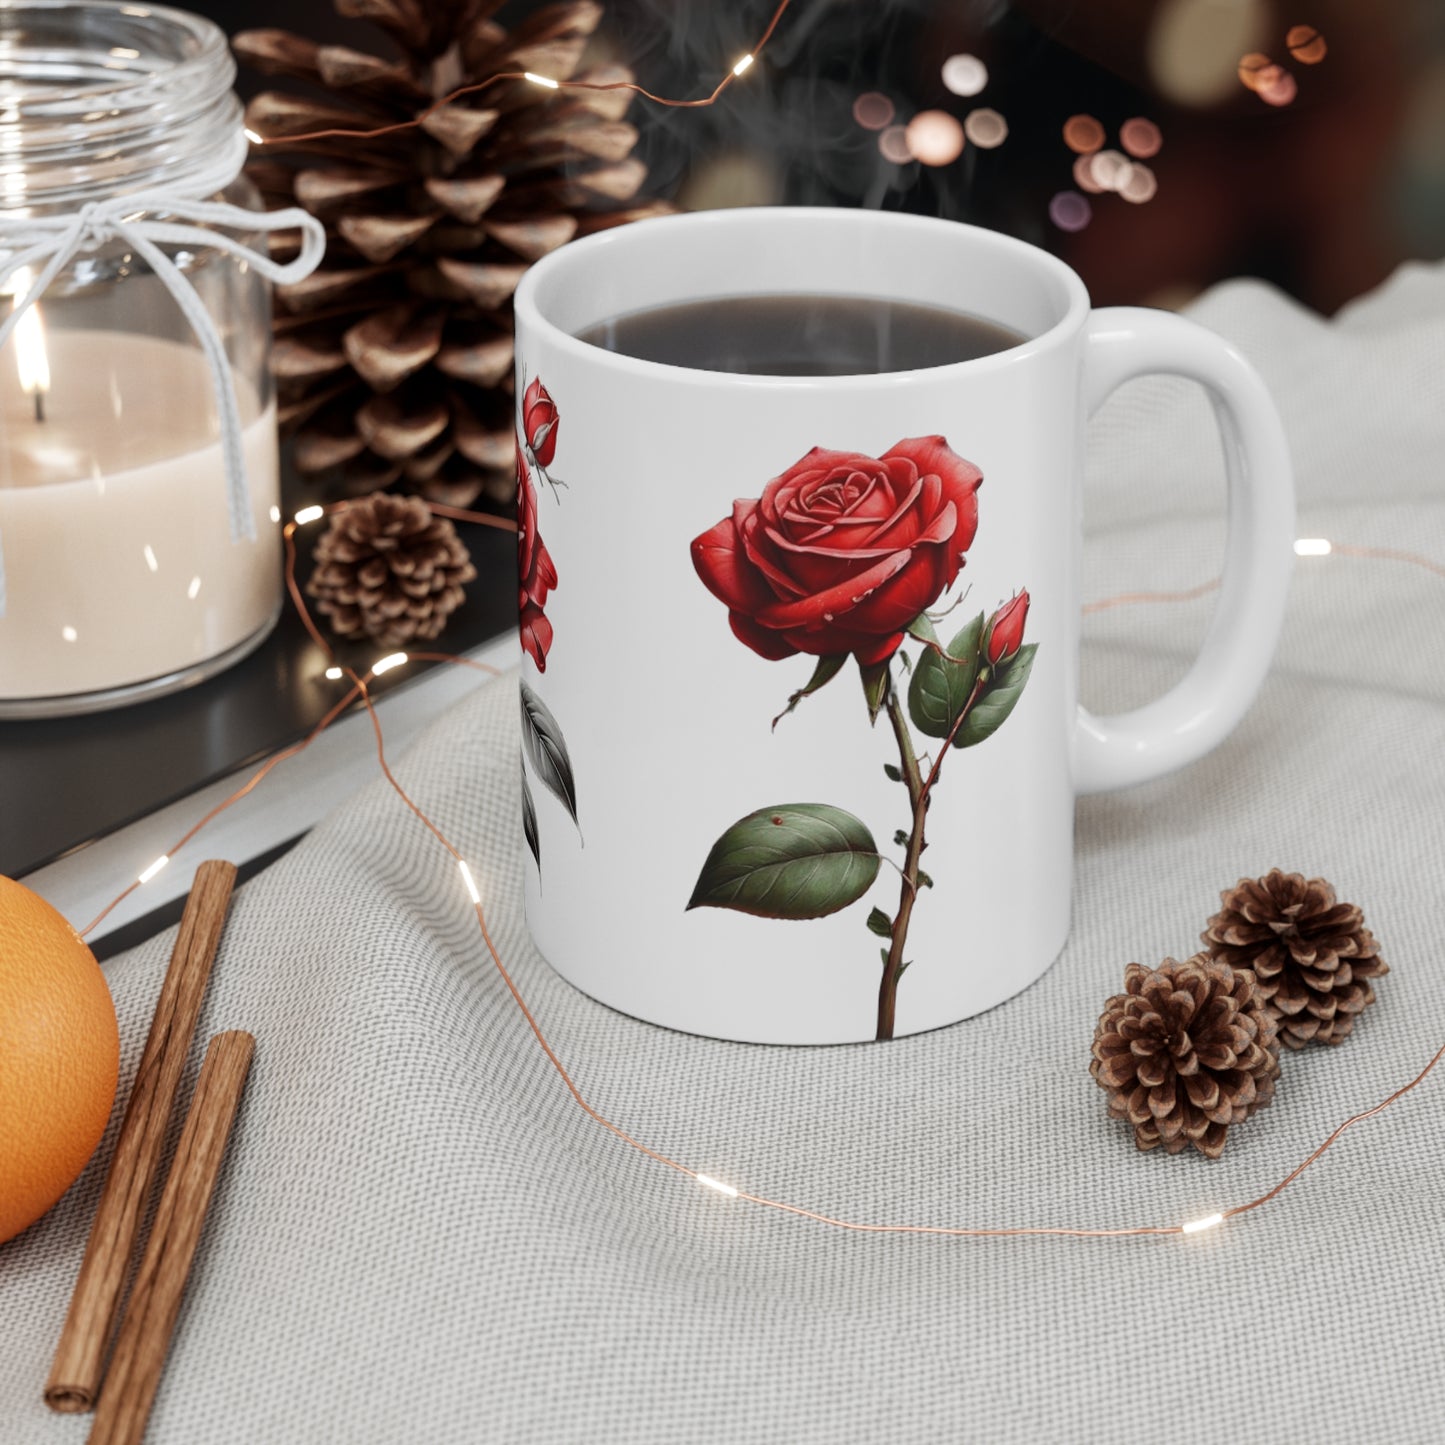 Red Roses Art Mug - Ceramic Coffee Mug 11oz